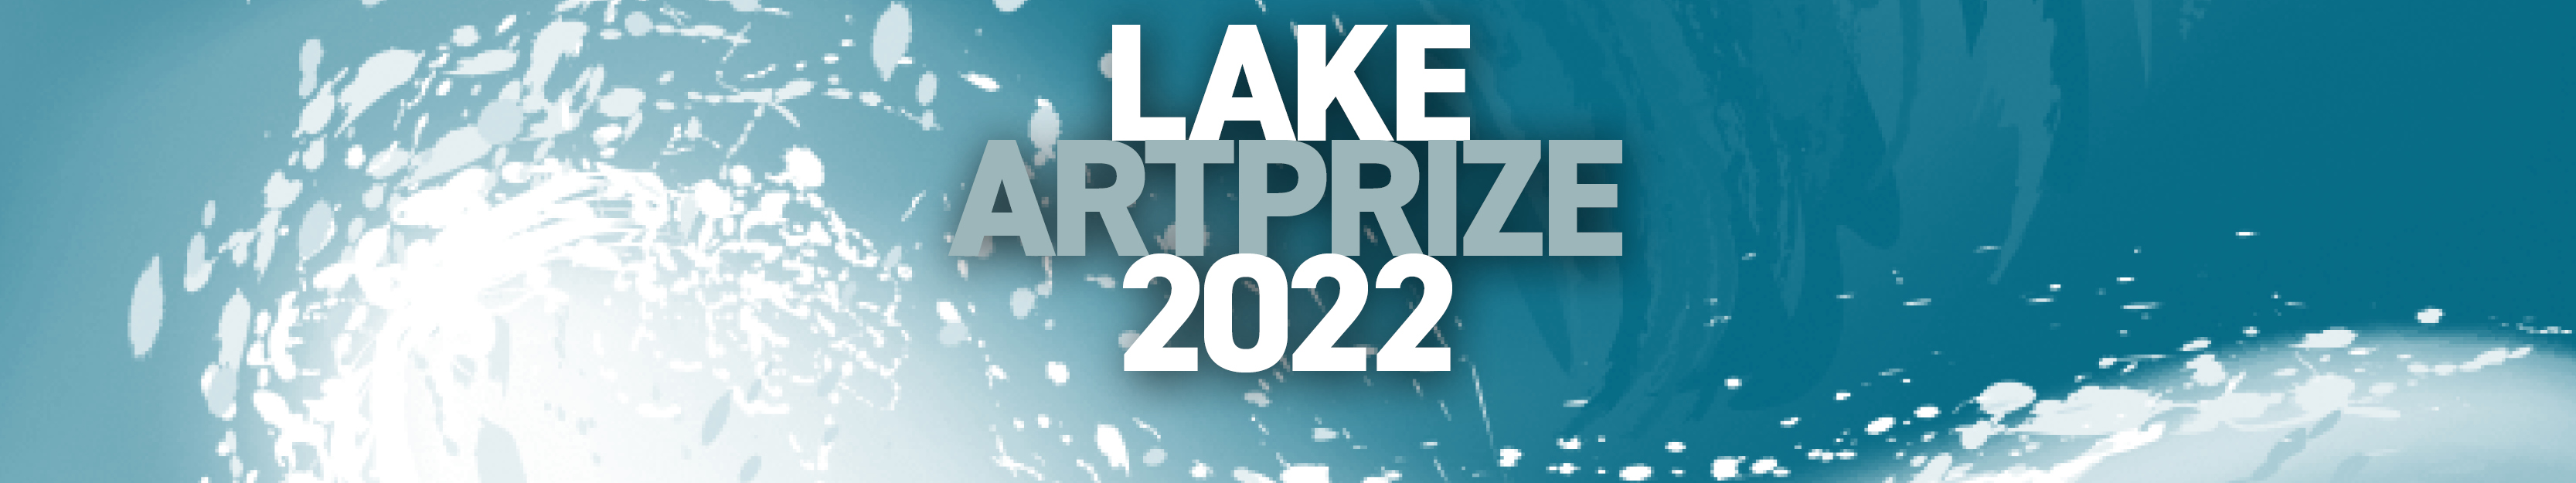 28472 MAC Lake Art Prize 2022_website banner 2000 pixels x 600 pixels vs2.jpg